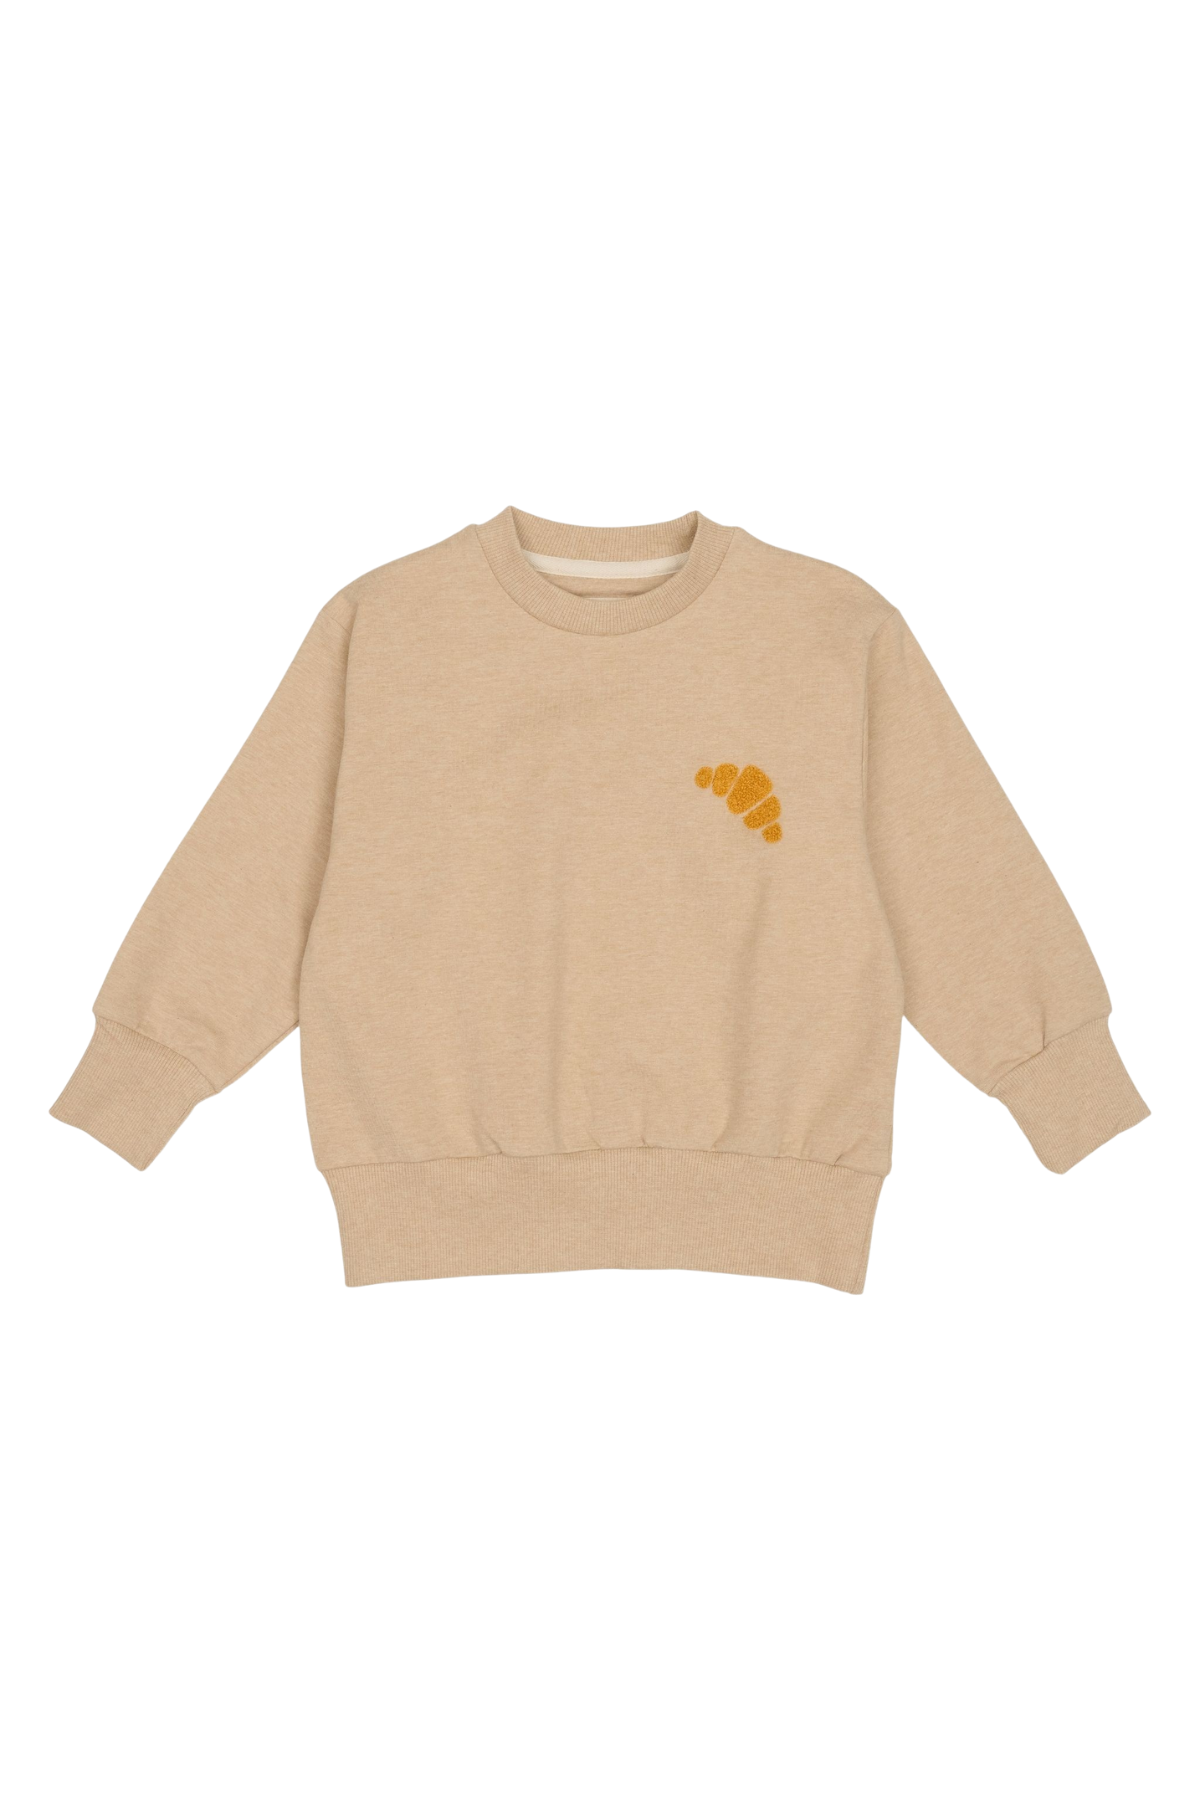 Sweater "Lyon" | Croissant